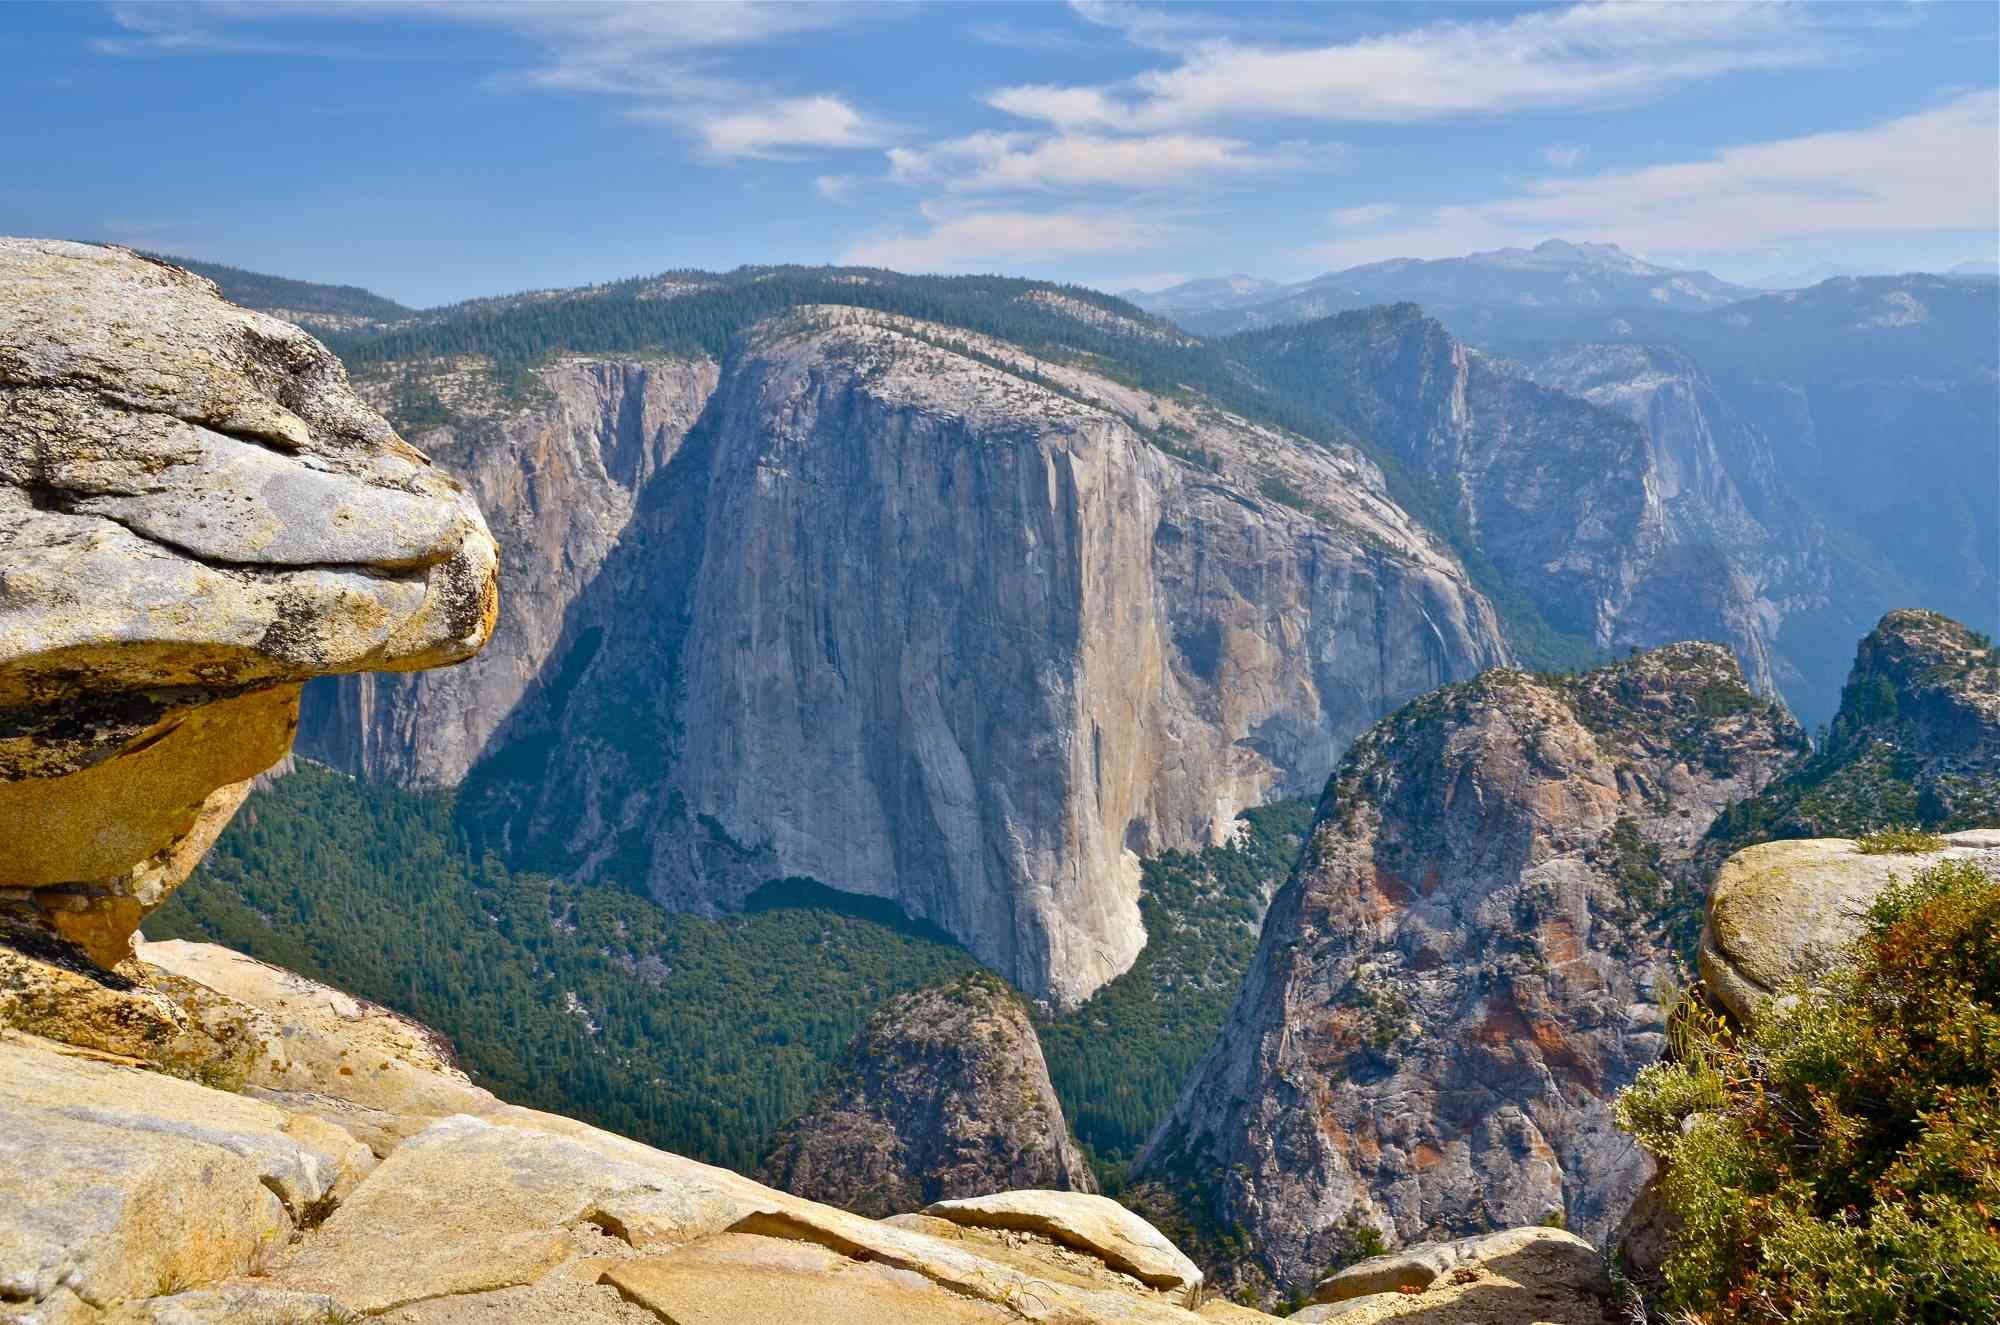 2012.07.13 - El Capitan from Dewey Point - Yosemite National Park - California - Clint Colver